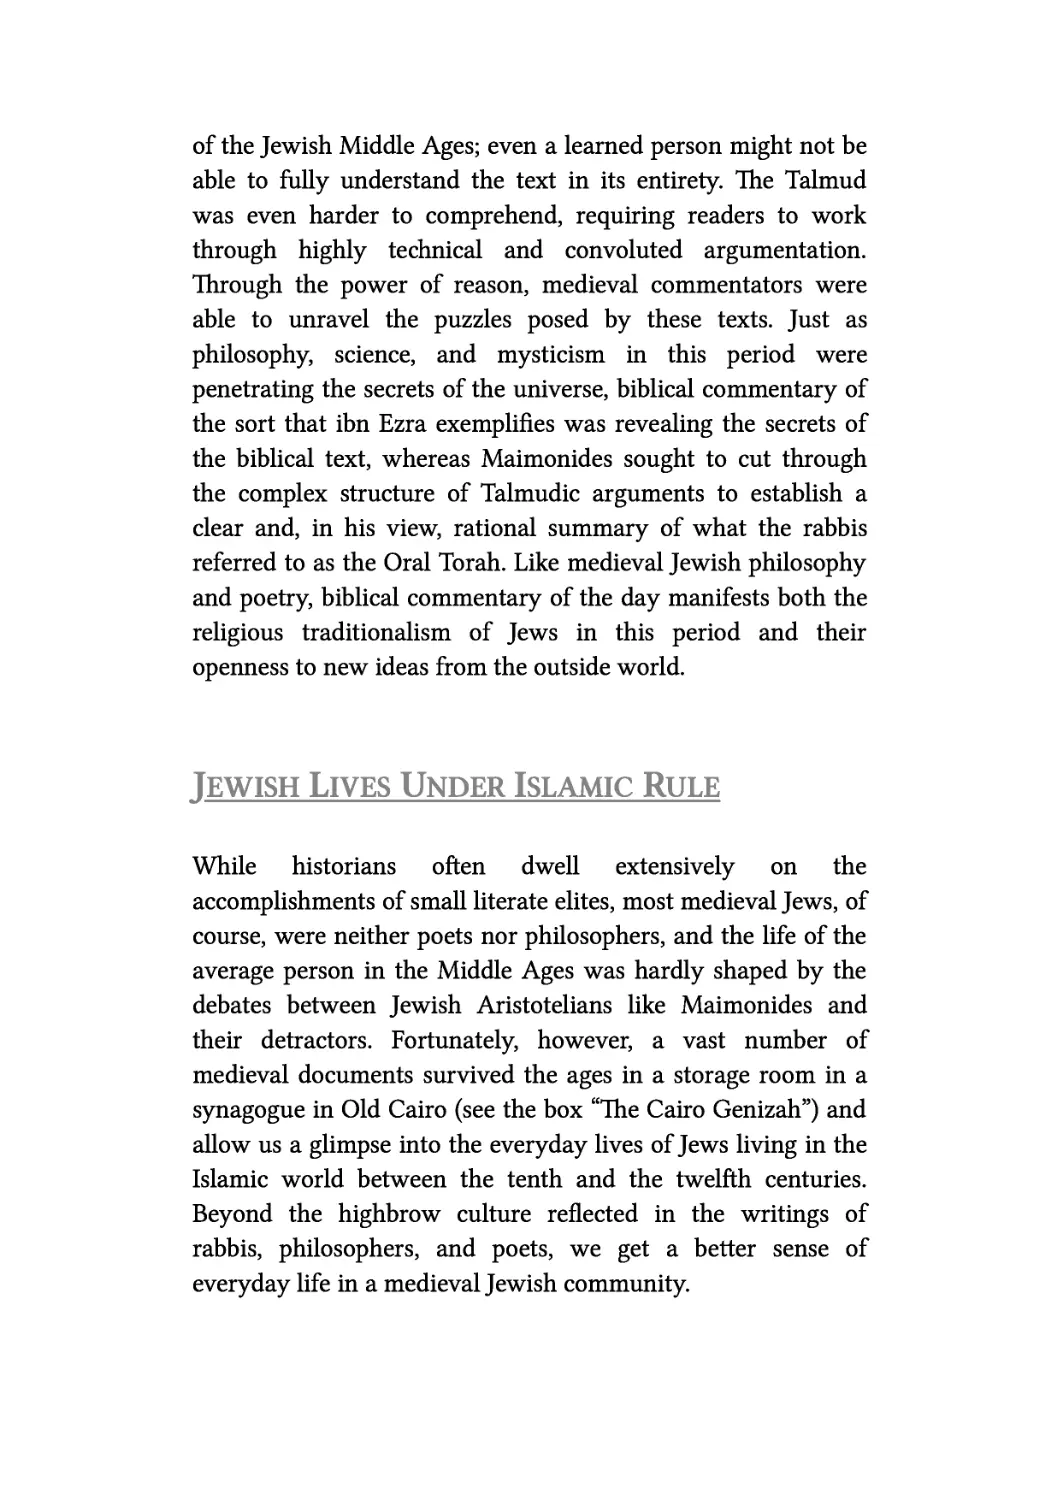 Jewish Lives Under Islamic Rule